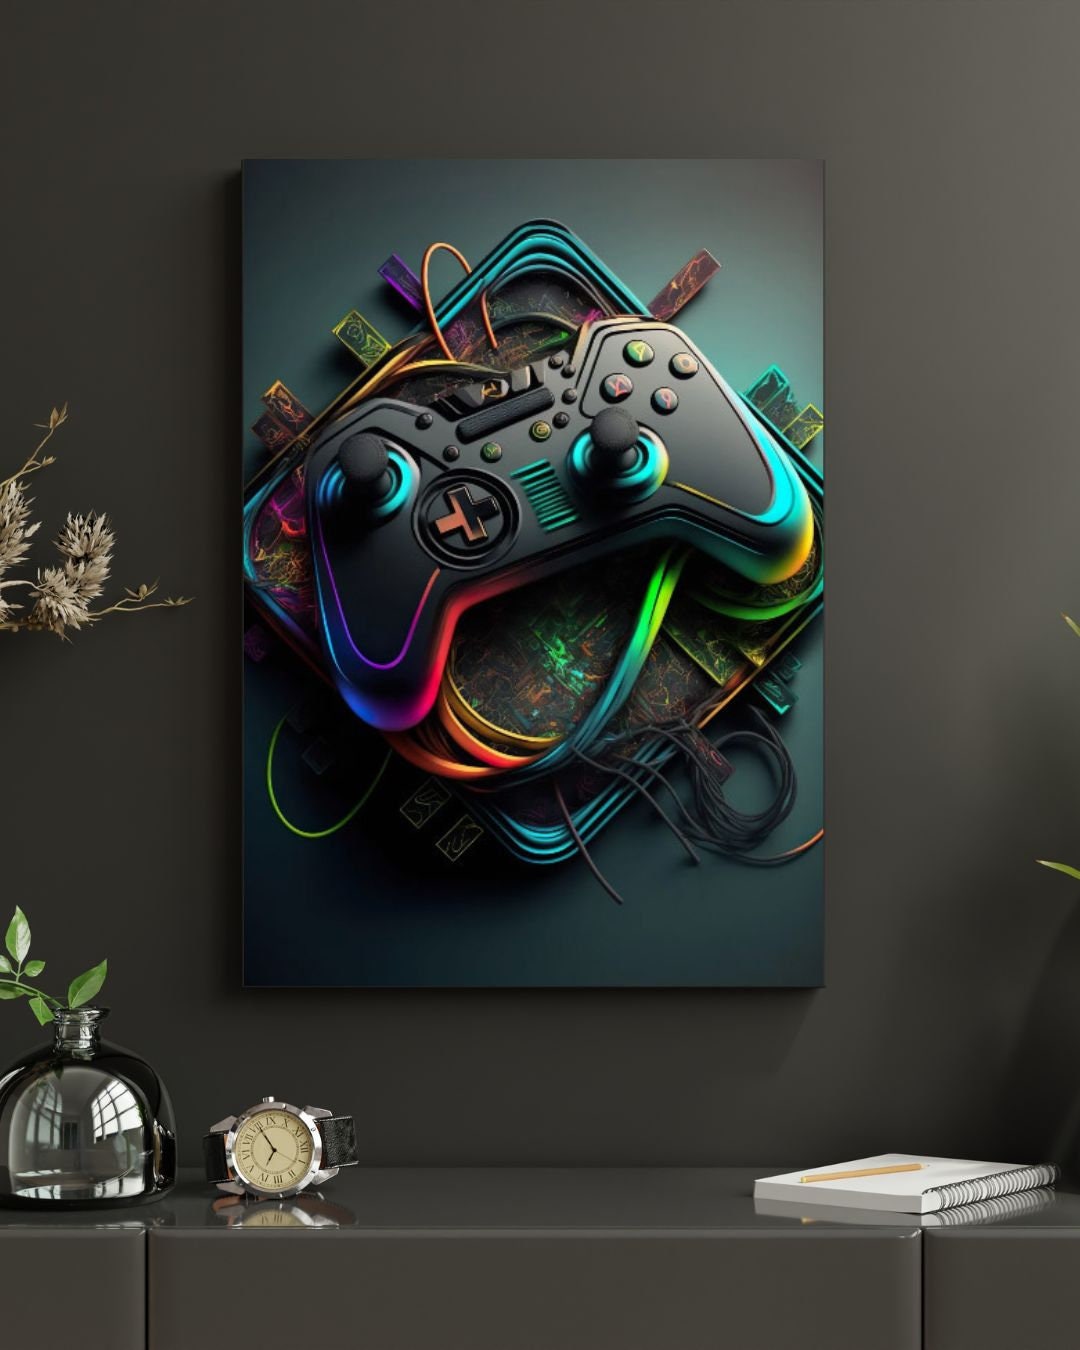 Custom 3-D Gaming Poster. Stunning Neon, Abstract Digital Presentation for  The Avid Gaming Fan!